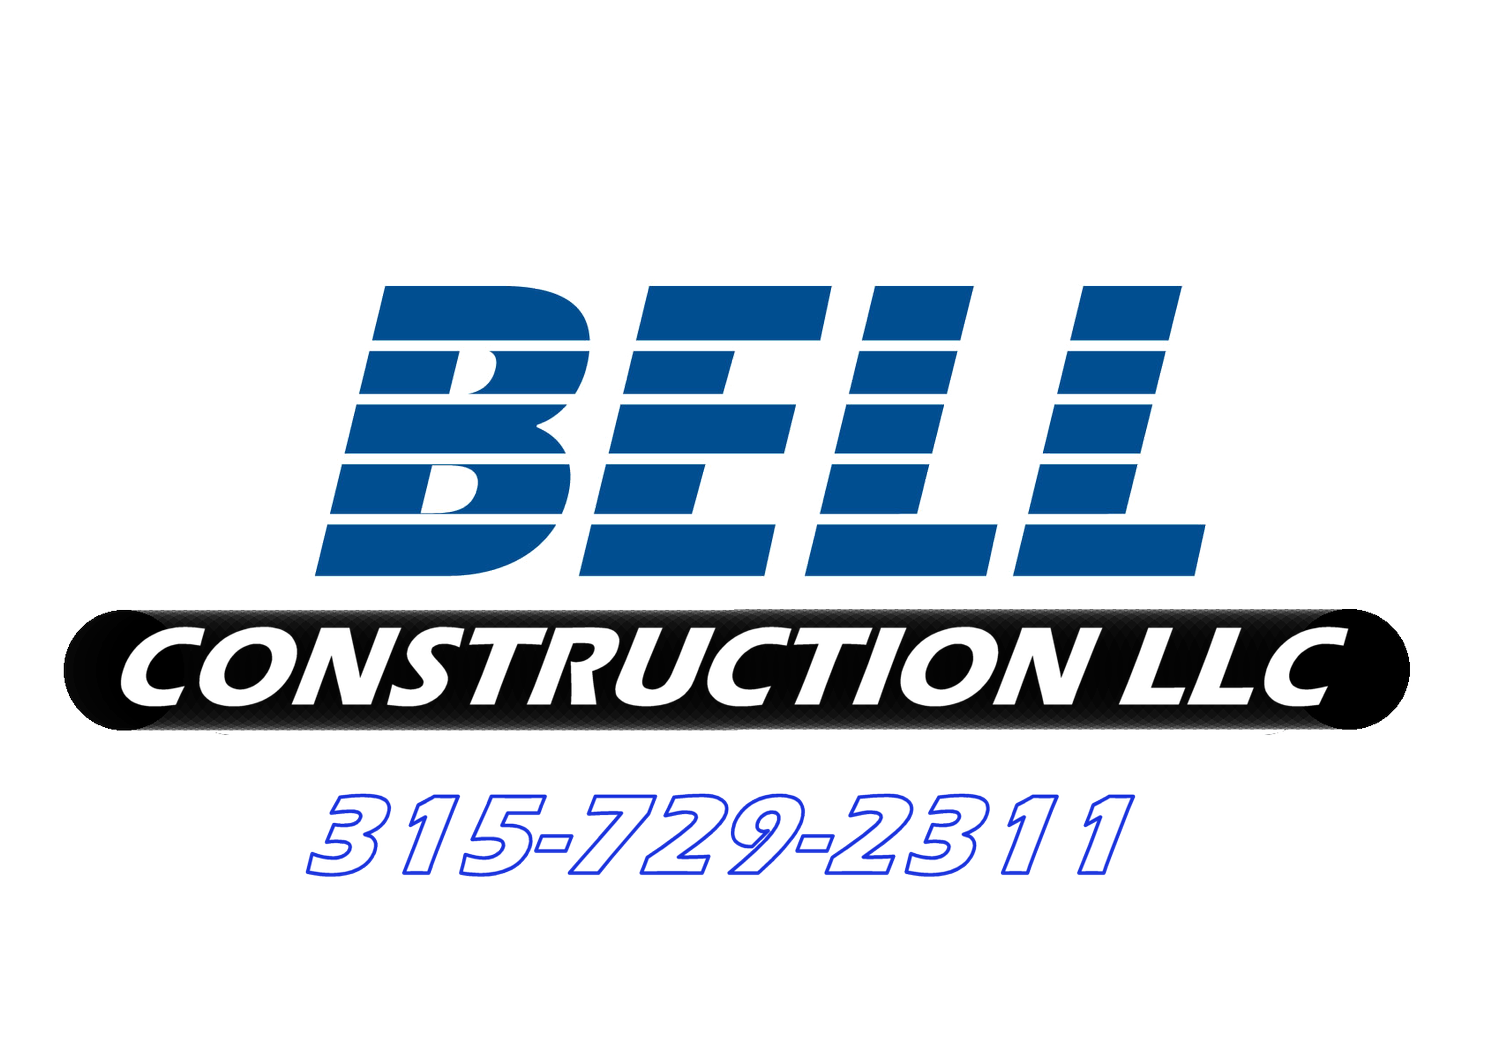 Bell Construction LLC